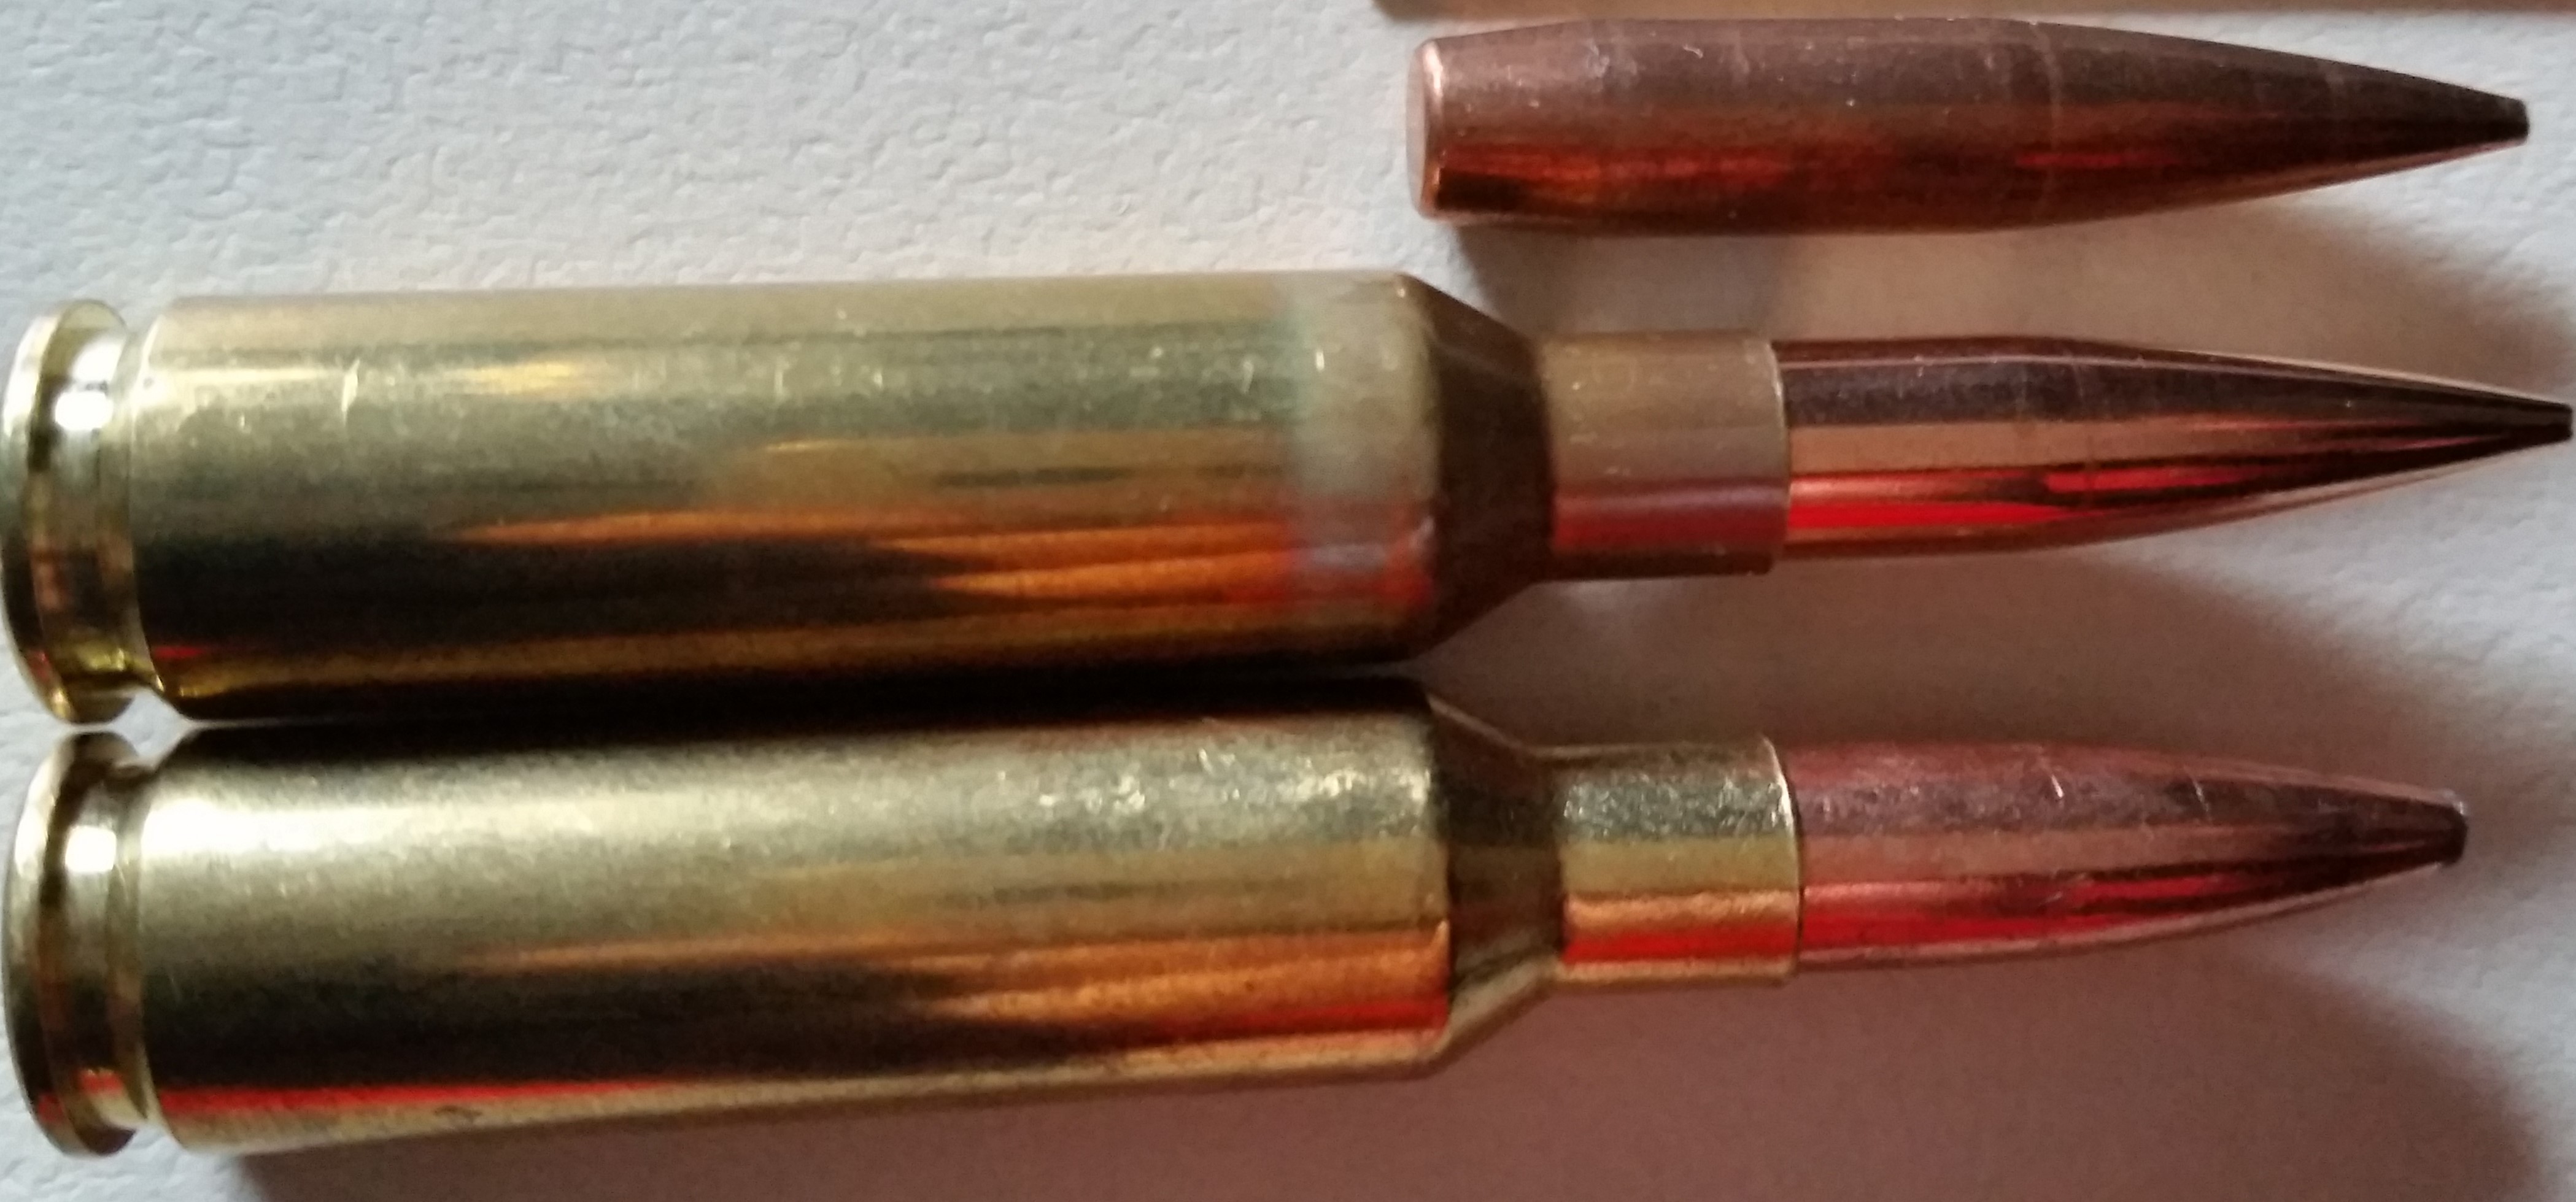 Berger Reloading Cartridge - Bullet seating depth 18.05.2019 - Copy 2.jpg